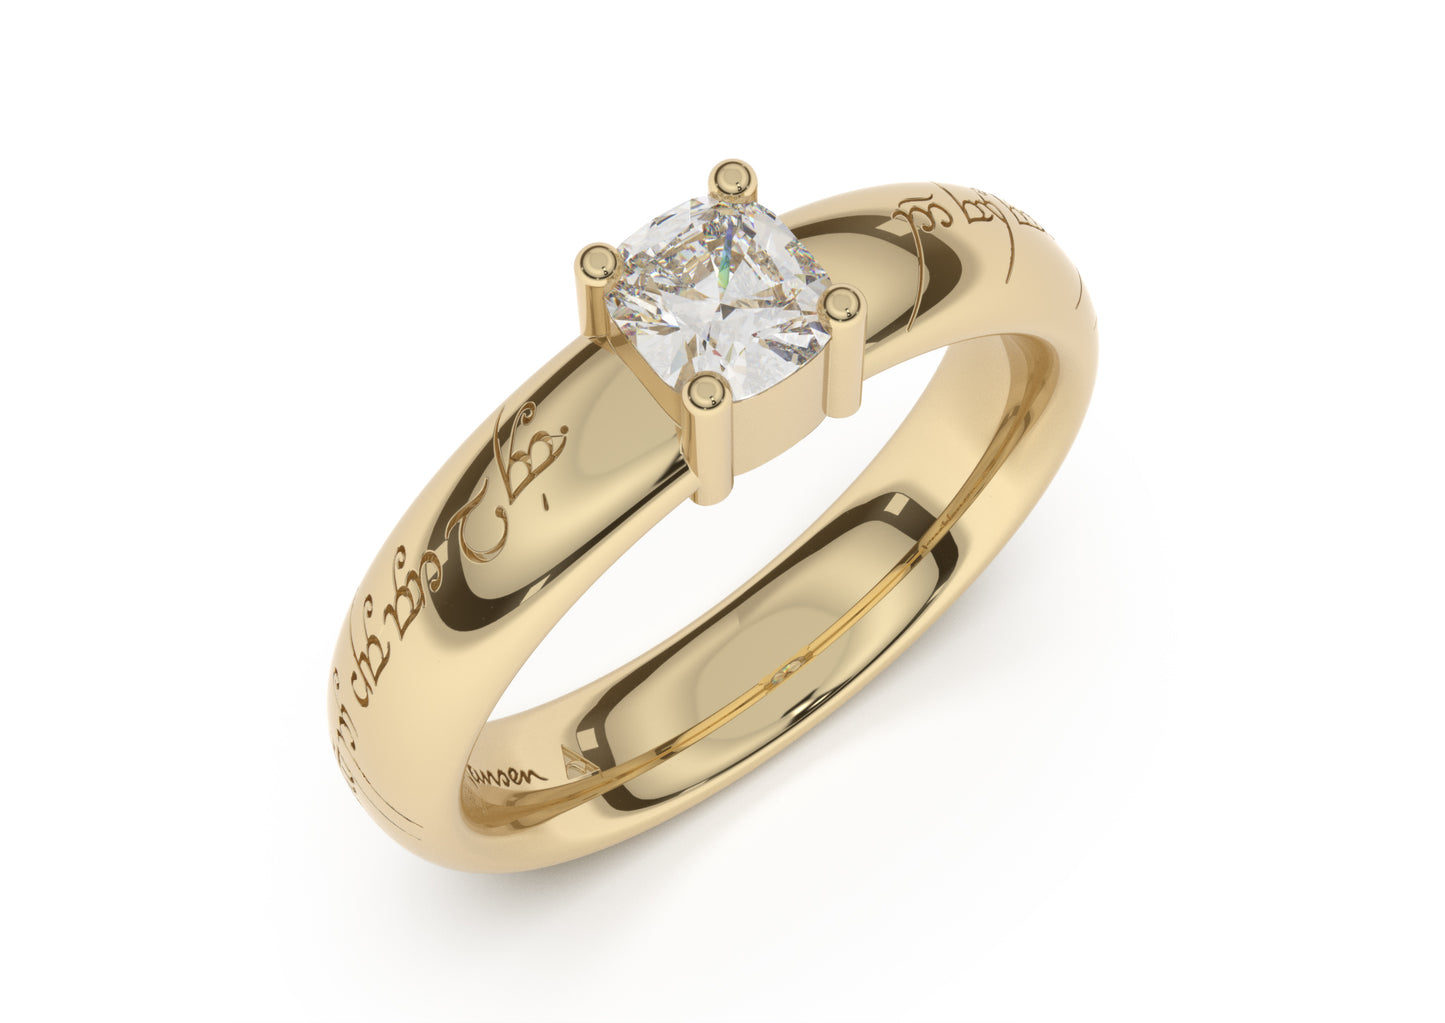 Cushion Classic Elvish Engagement Ring, Yellow Gold